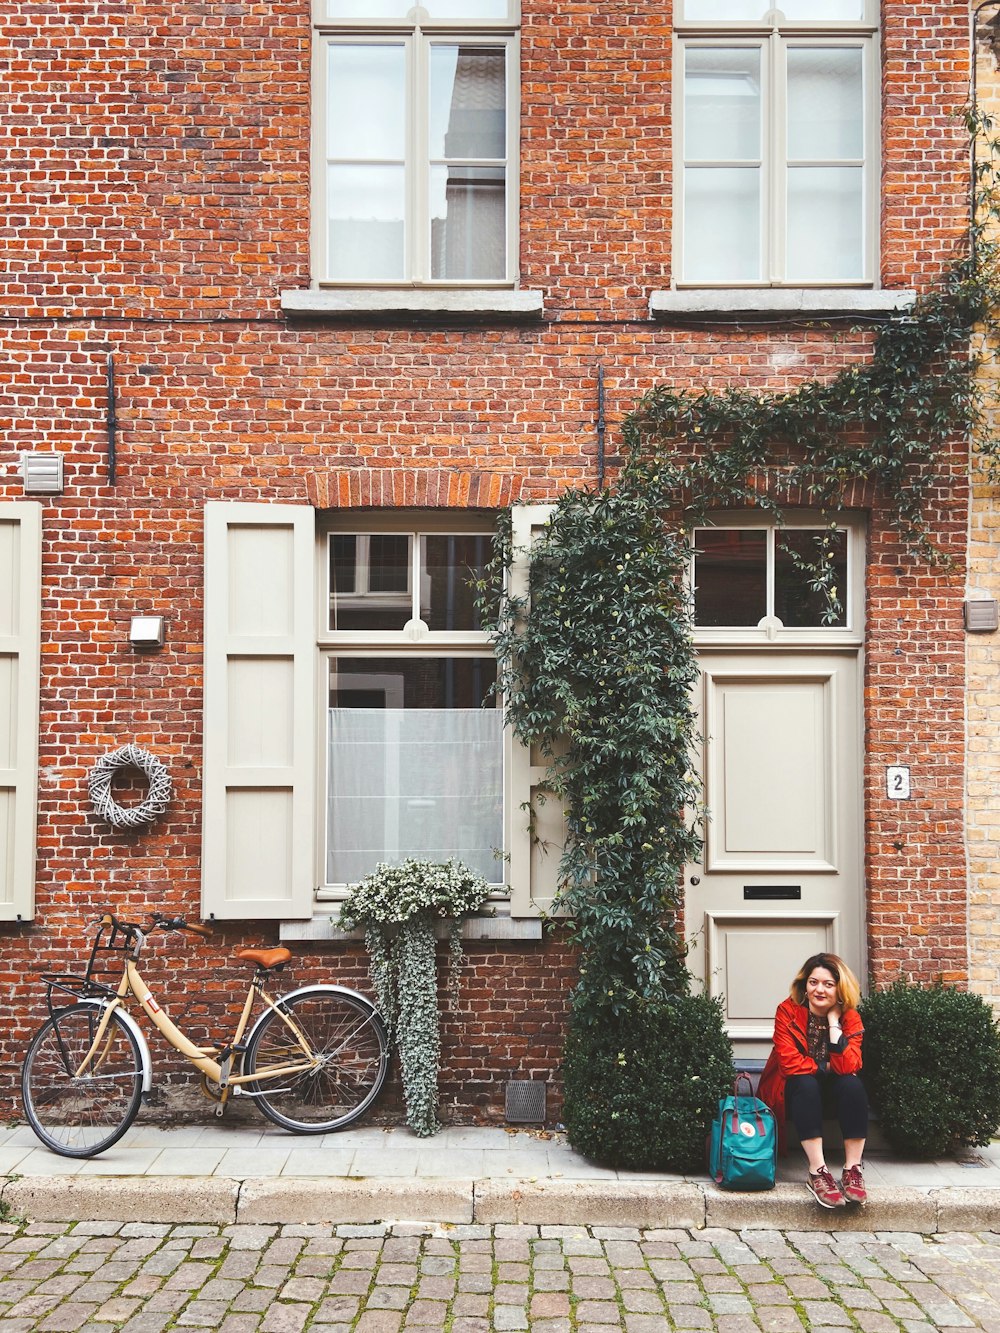 Frau in roter Jacke tagsüber neben braunem Backsteingebäude